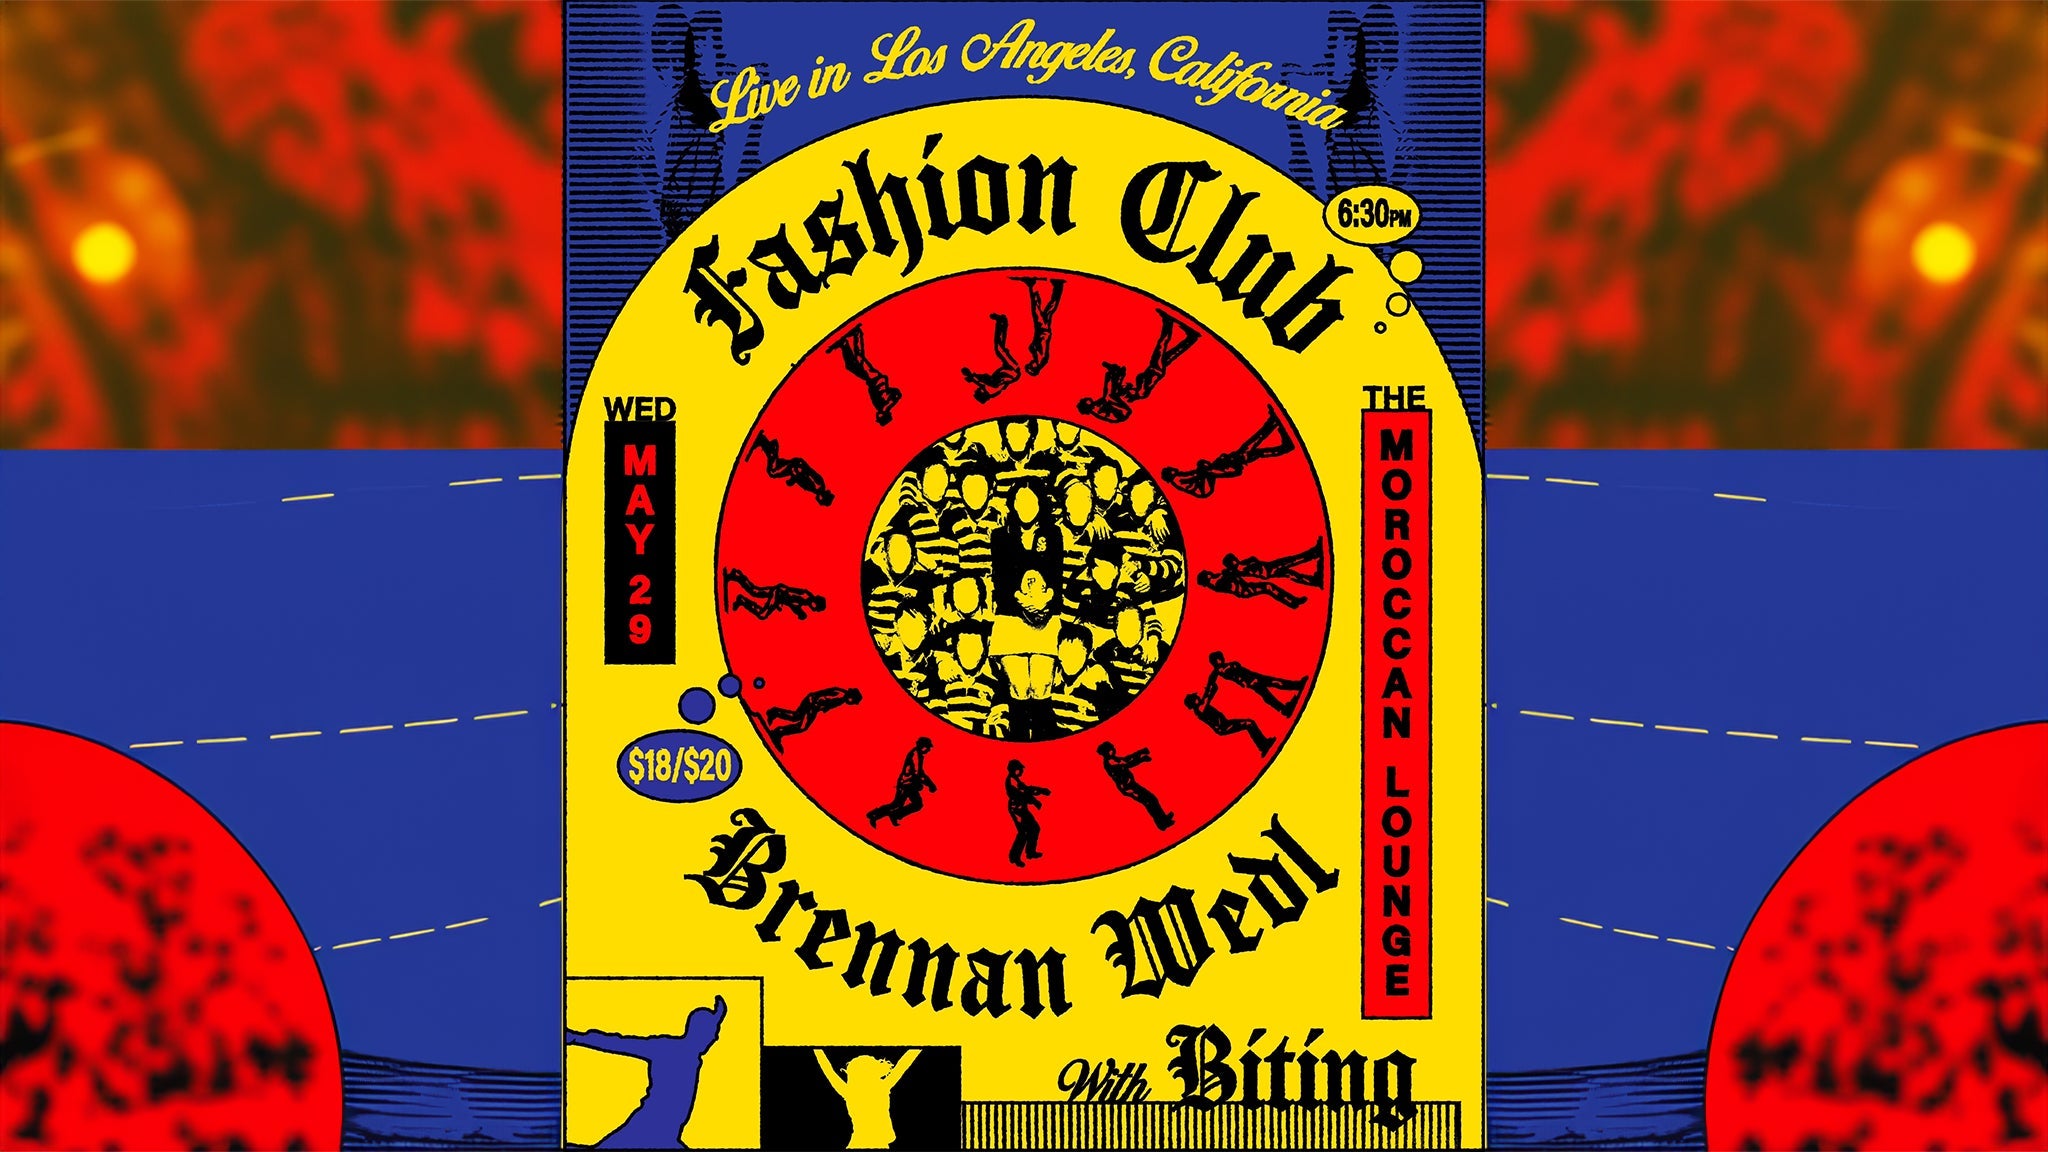 Fashion Club / Brennan Wedl w/ Biting at The Moroccan Lounge